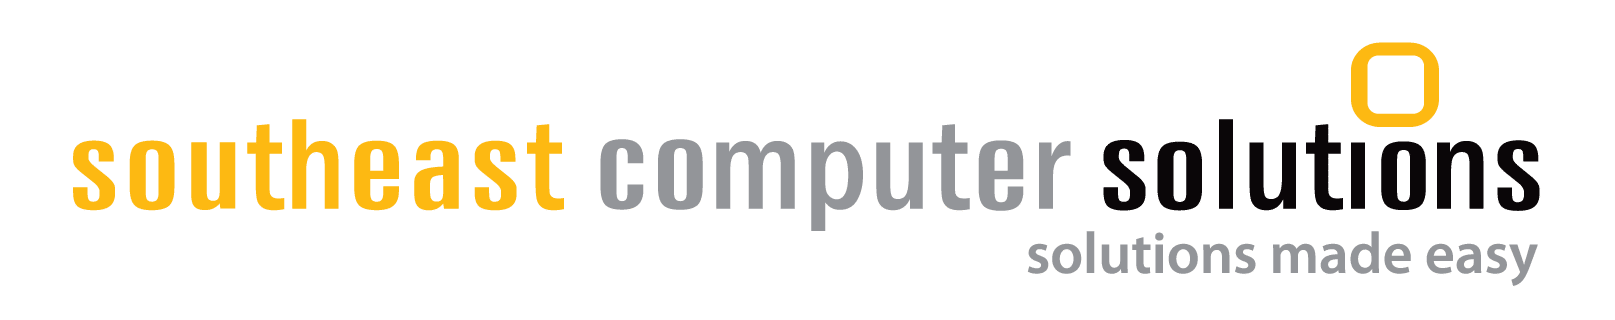 Southeast-Computer-Logo